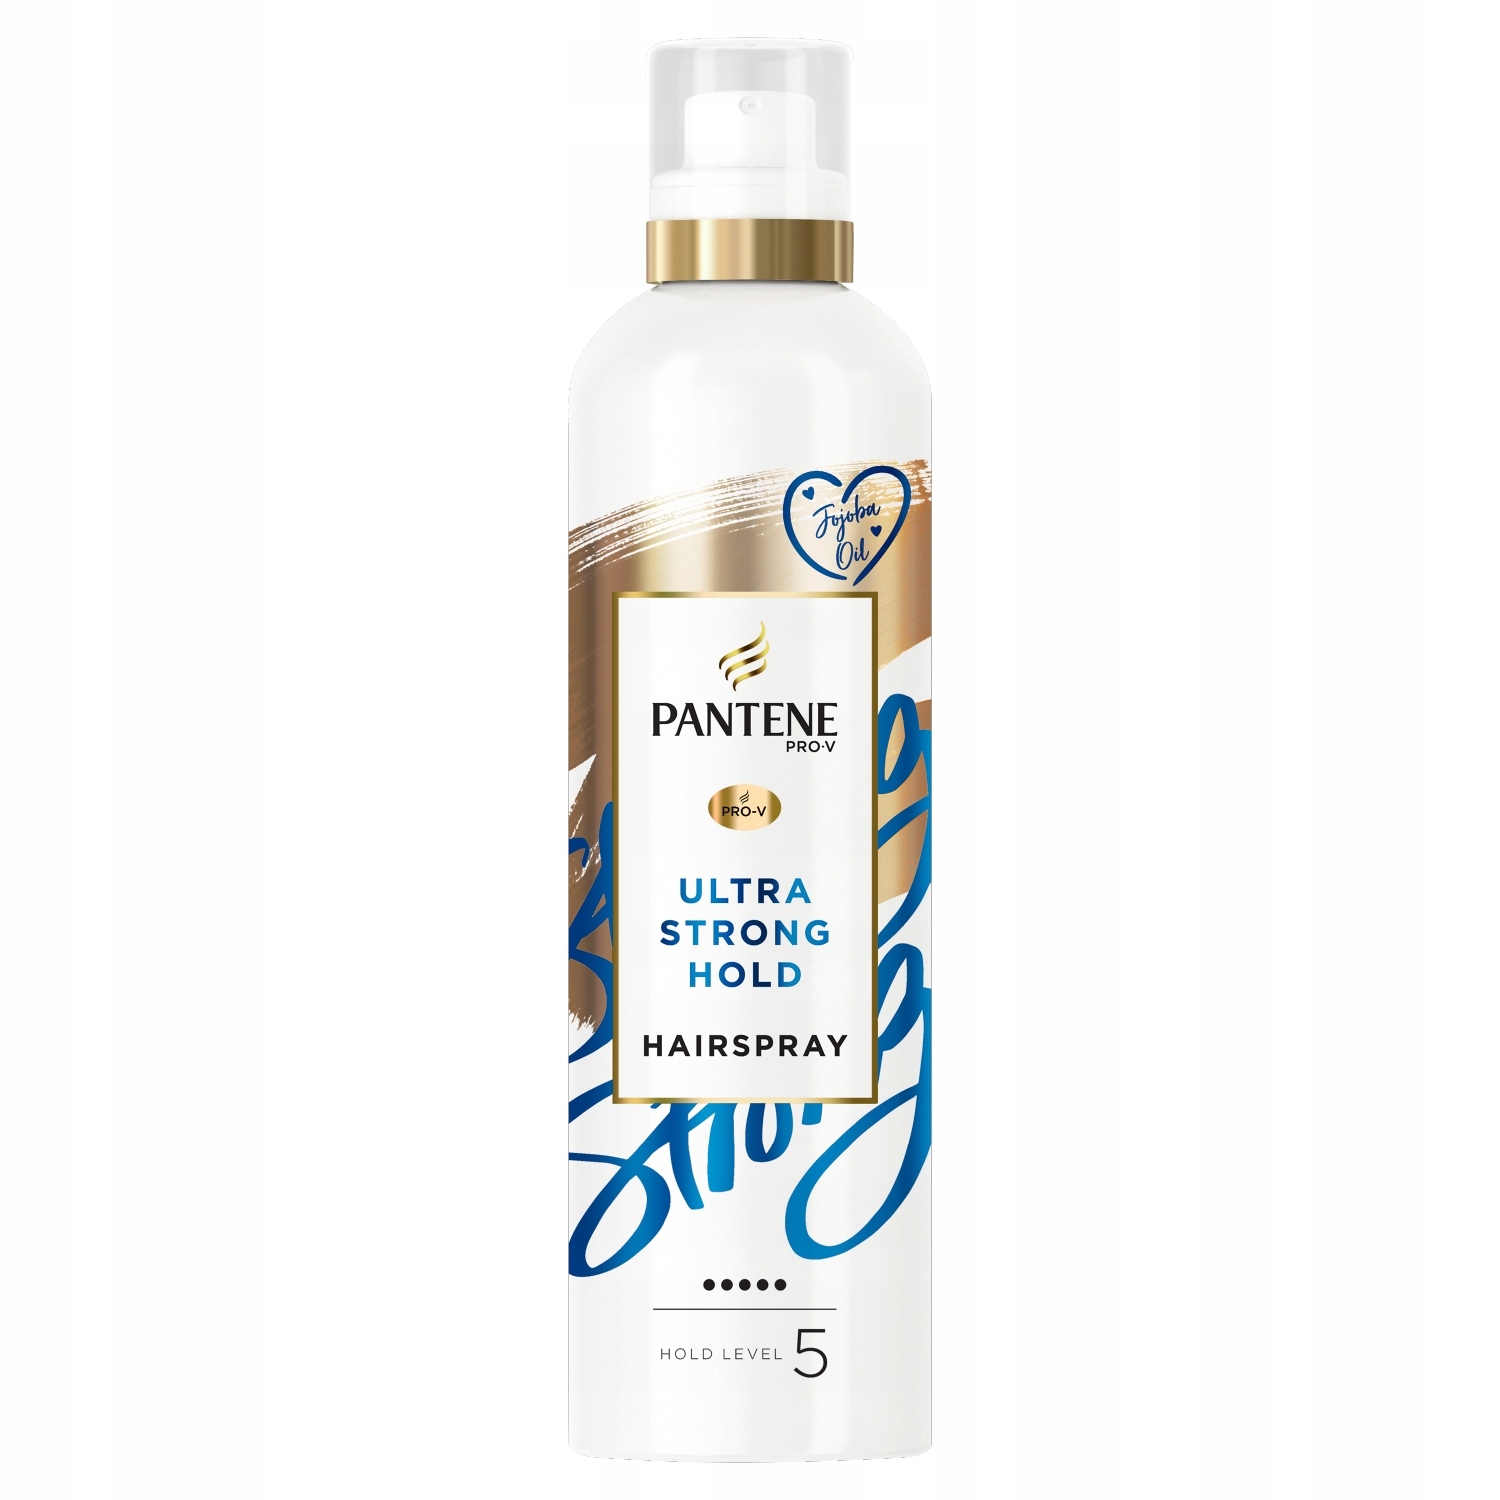 szampon pantene pro v200 ml